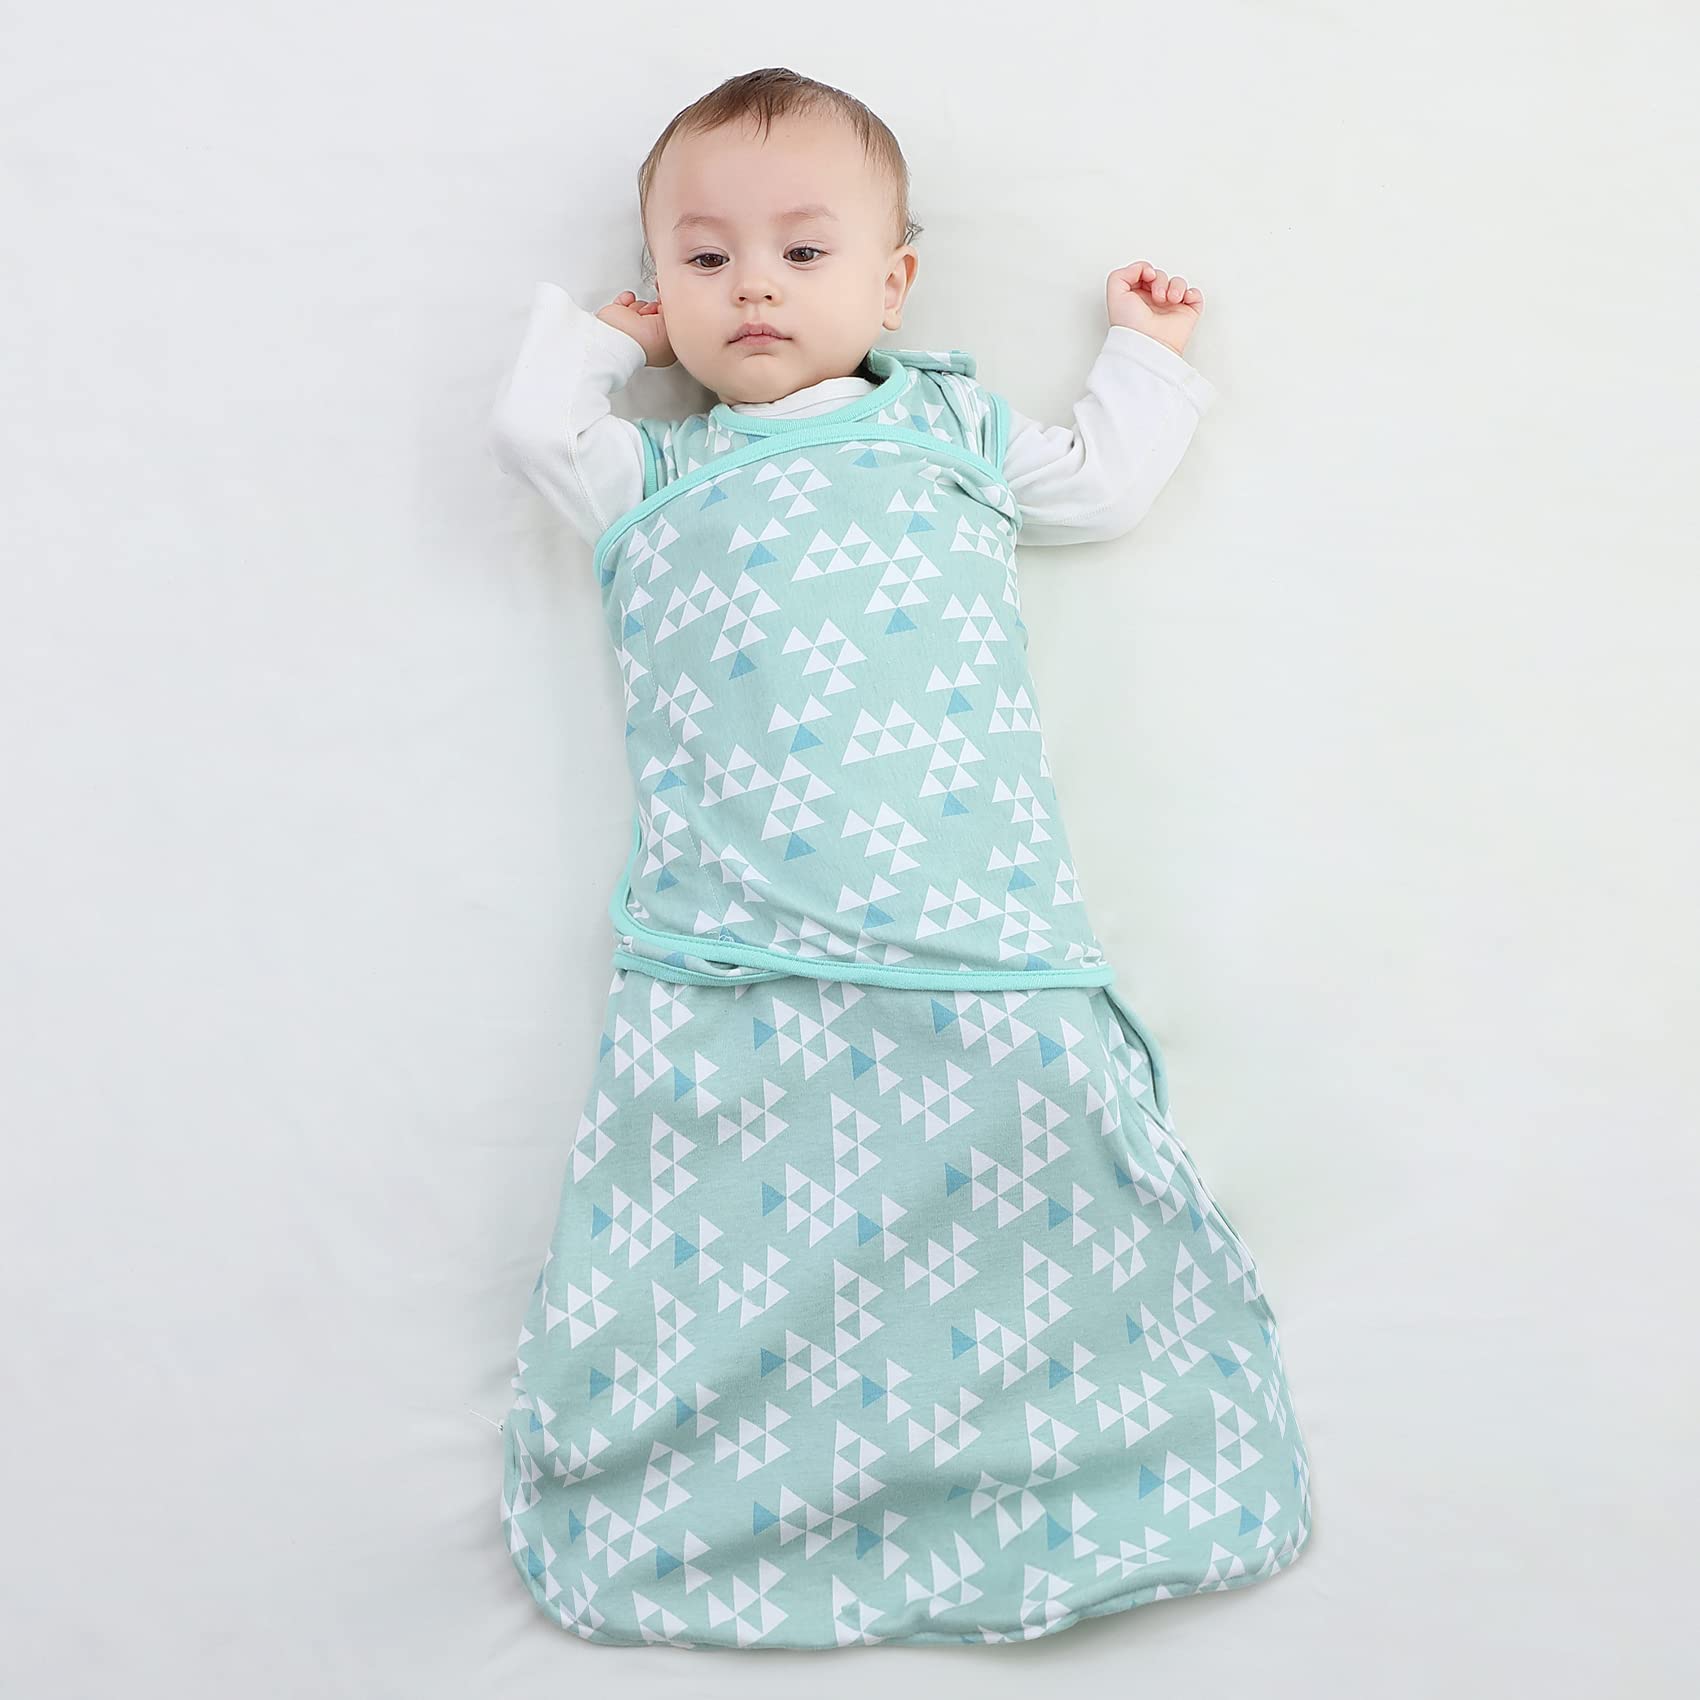 AOUHA Sleepsack Swaddle,Adjustable Wearable Baby Sleep Sack XL,Miracle Swaddle for Babies Large,100% Cotton,6-12 Months(Green)